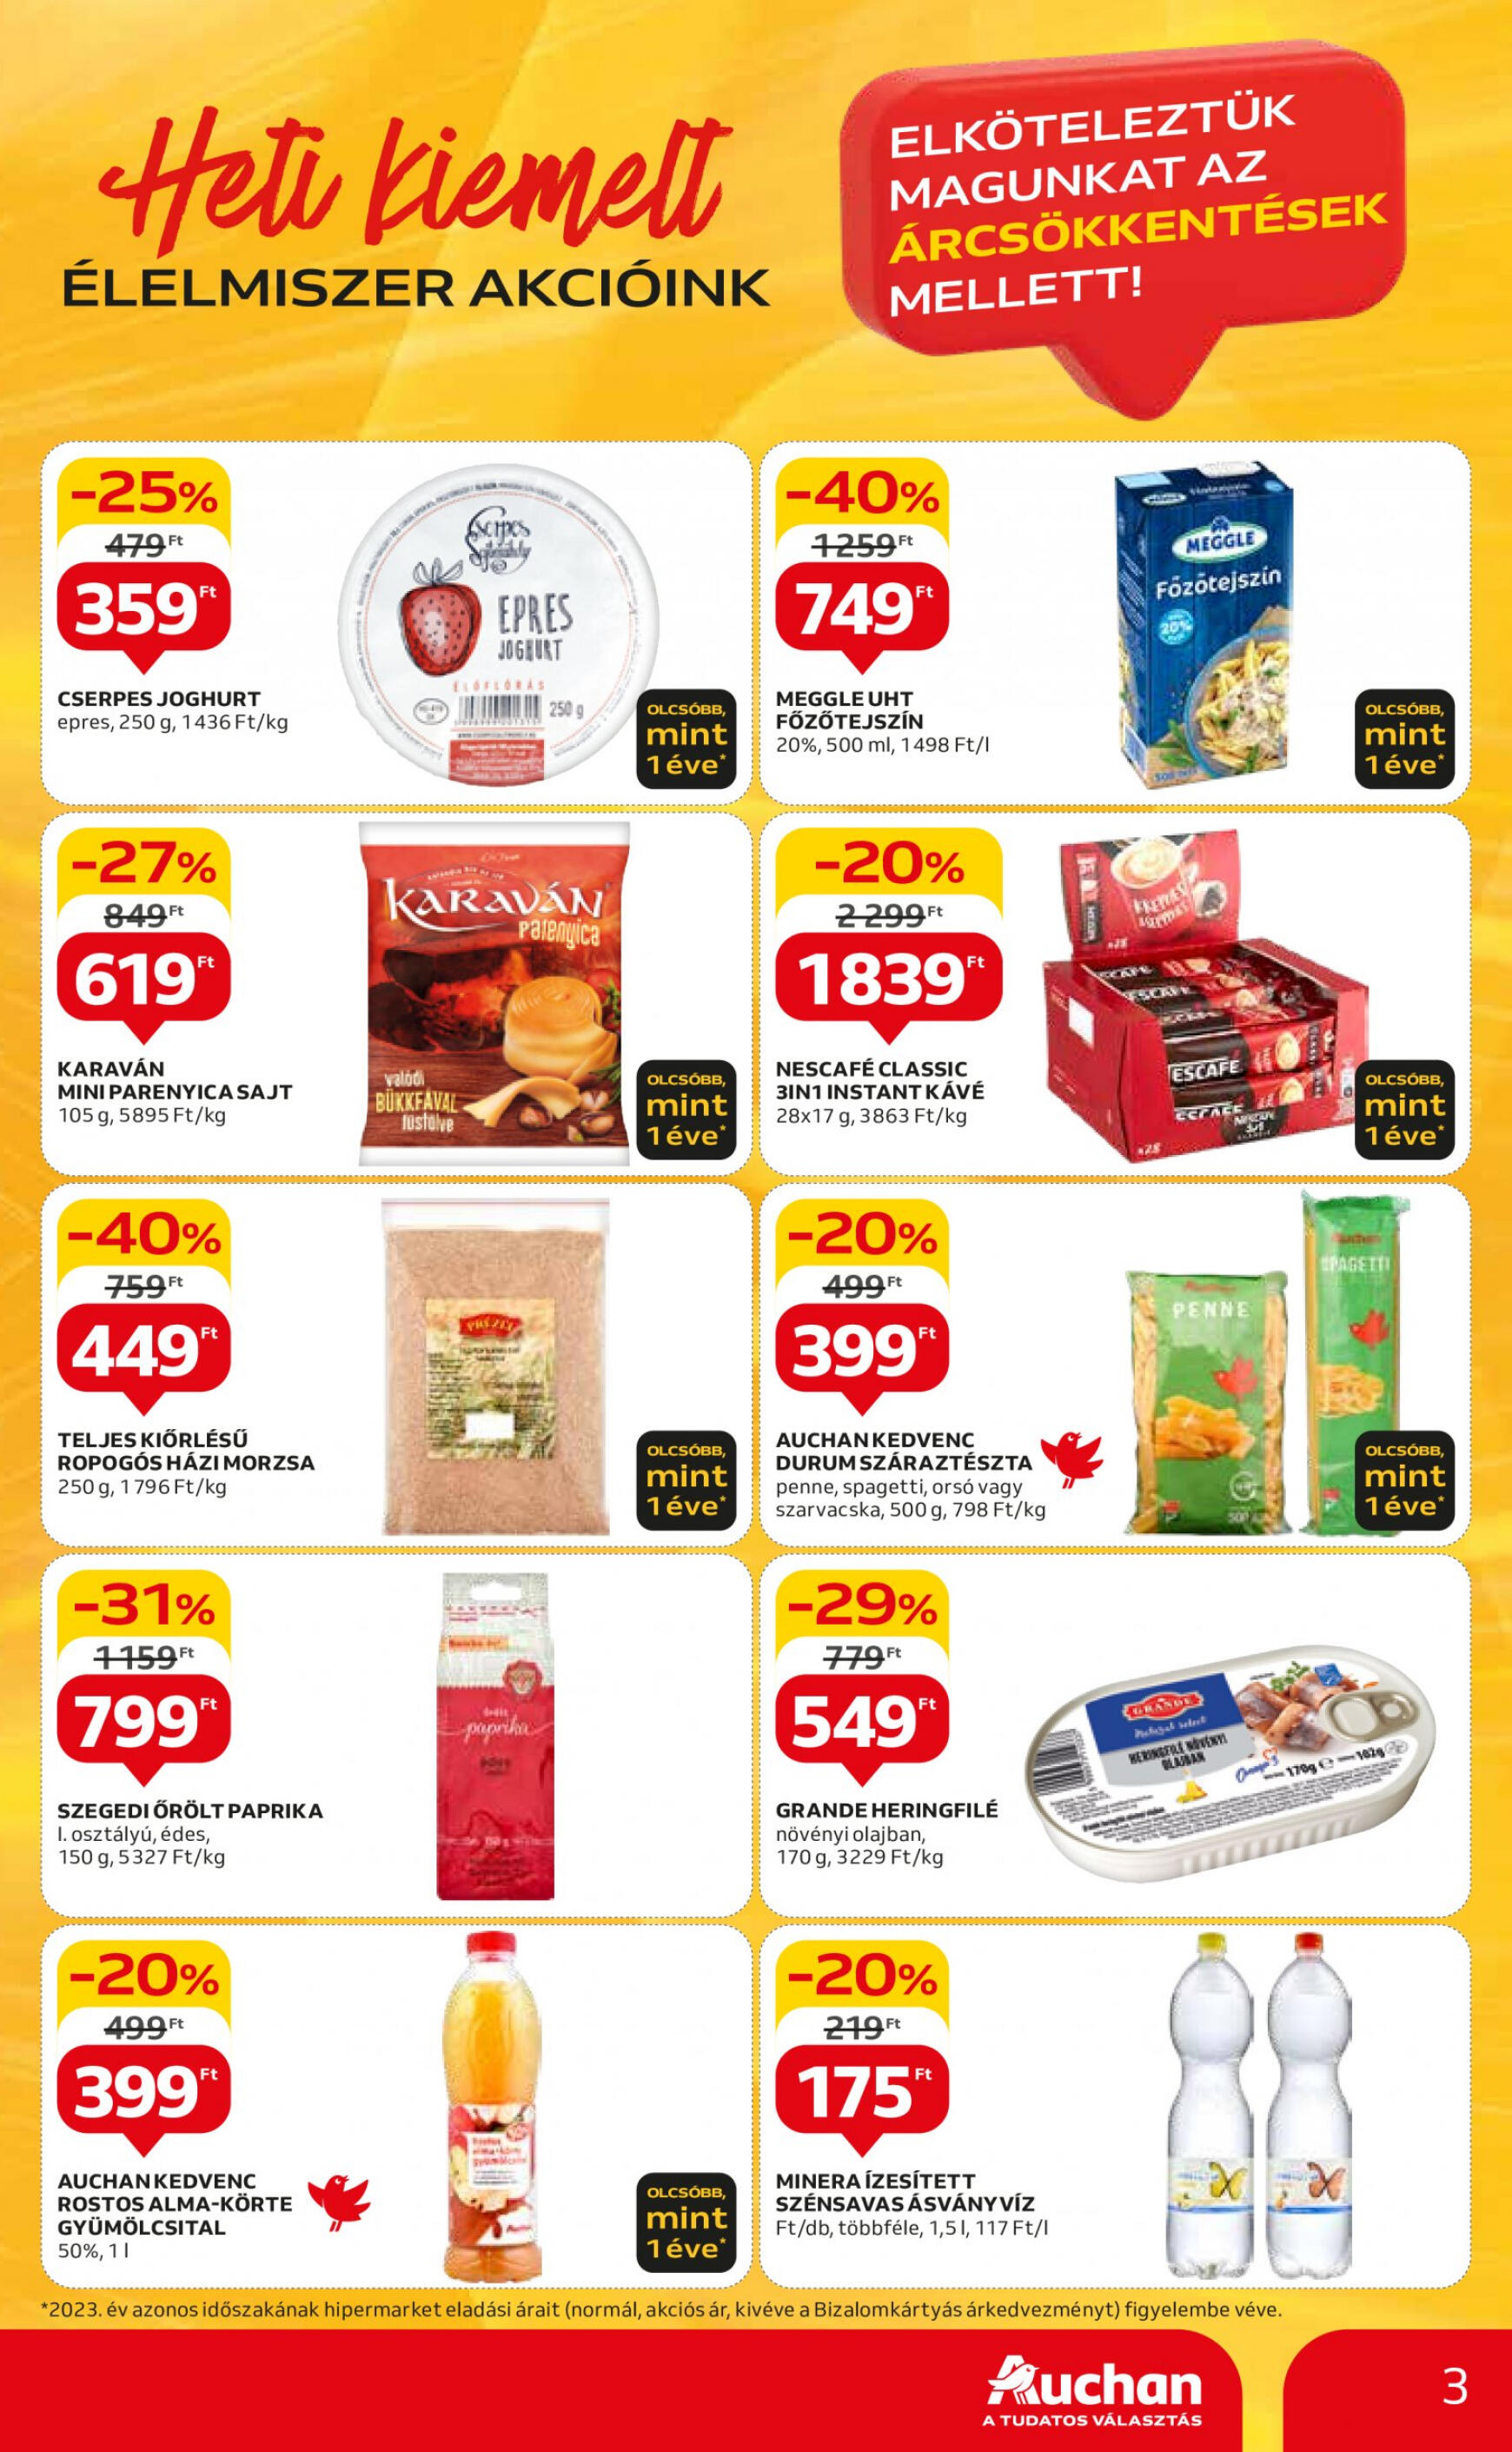 auchan - Aktuális újság Auchan 04.25. - 04.30. - page: 3